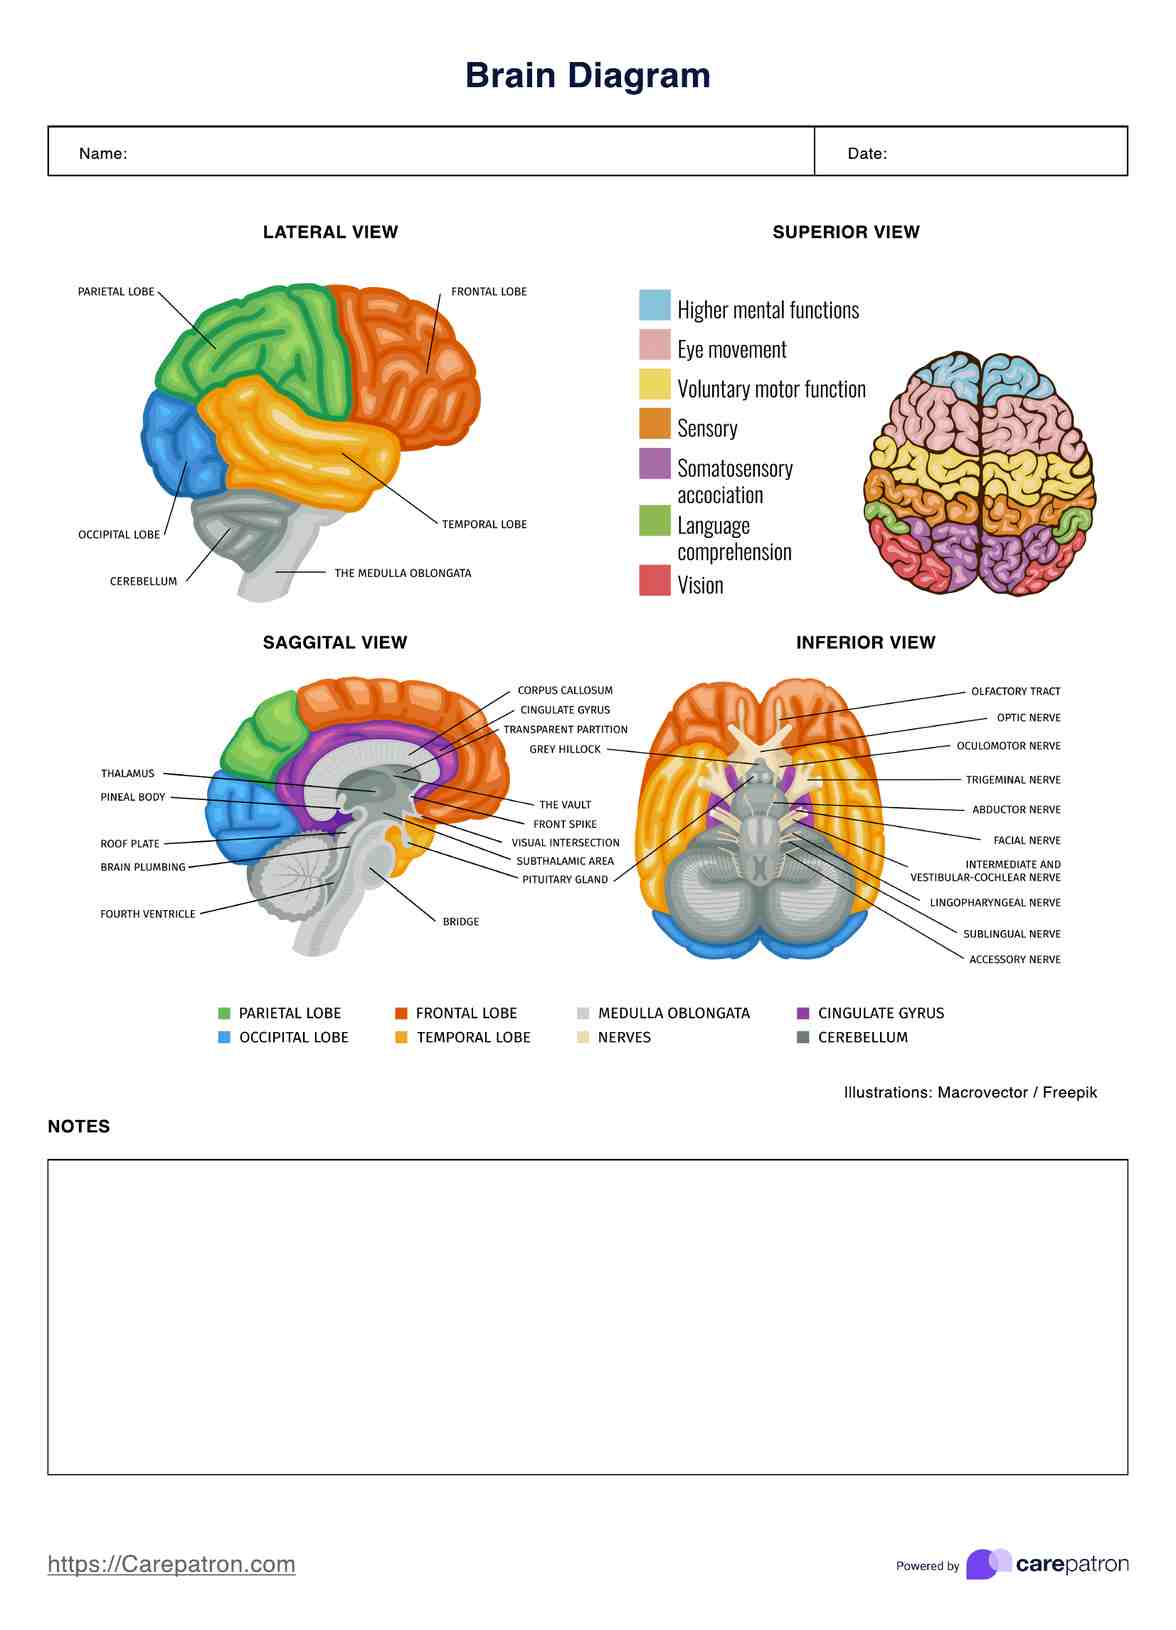 Brain Diagrams PDF Example